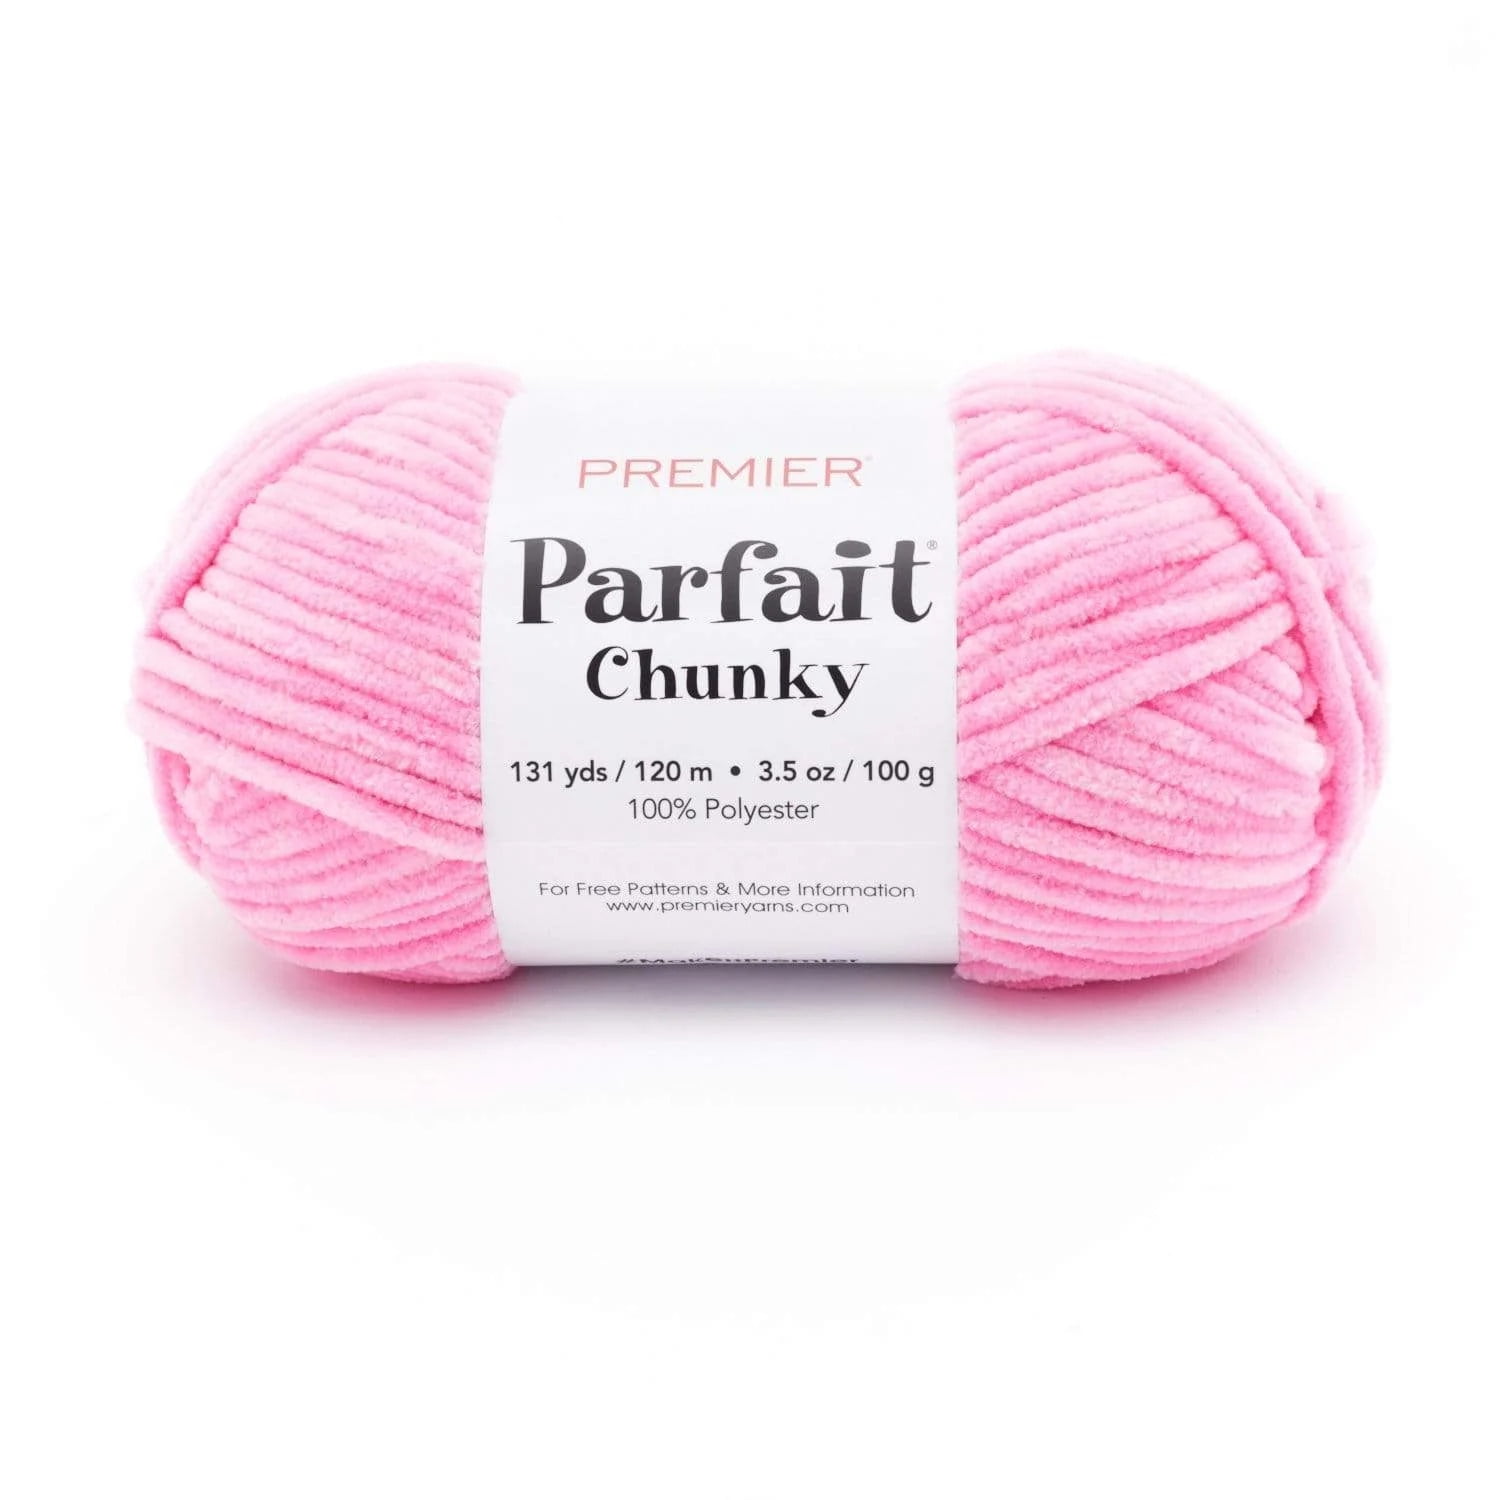 Premier Parfait Chunky Yarn-Pale Gray, 1 - Harris Teeter